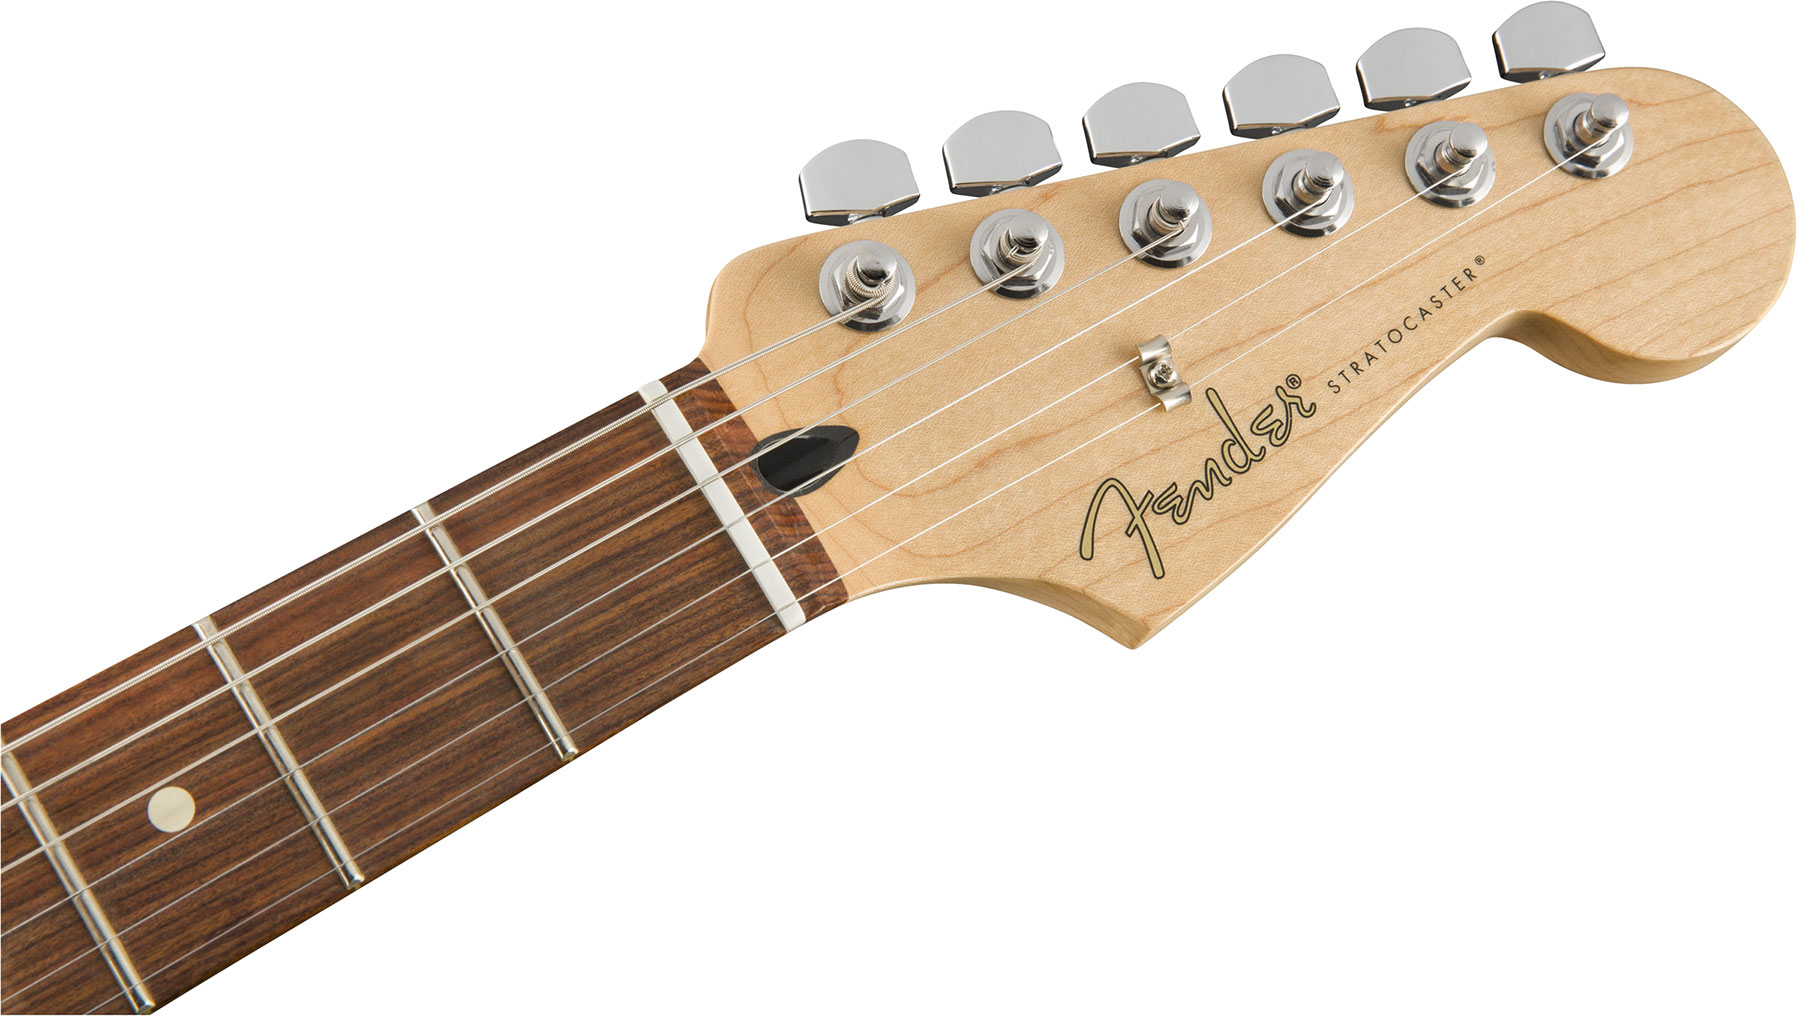 Fender Strat Player Plus Top Mex 3s Trem Pf - Tobacco Burst - Str shape electric guitar - Variation 2